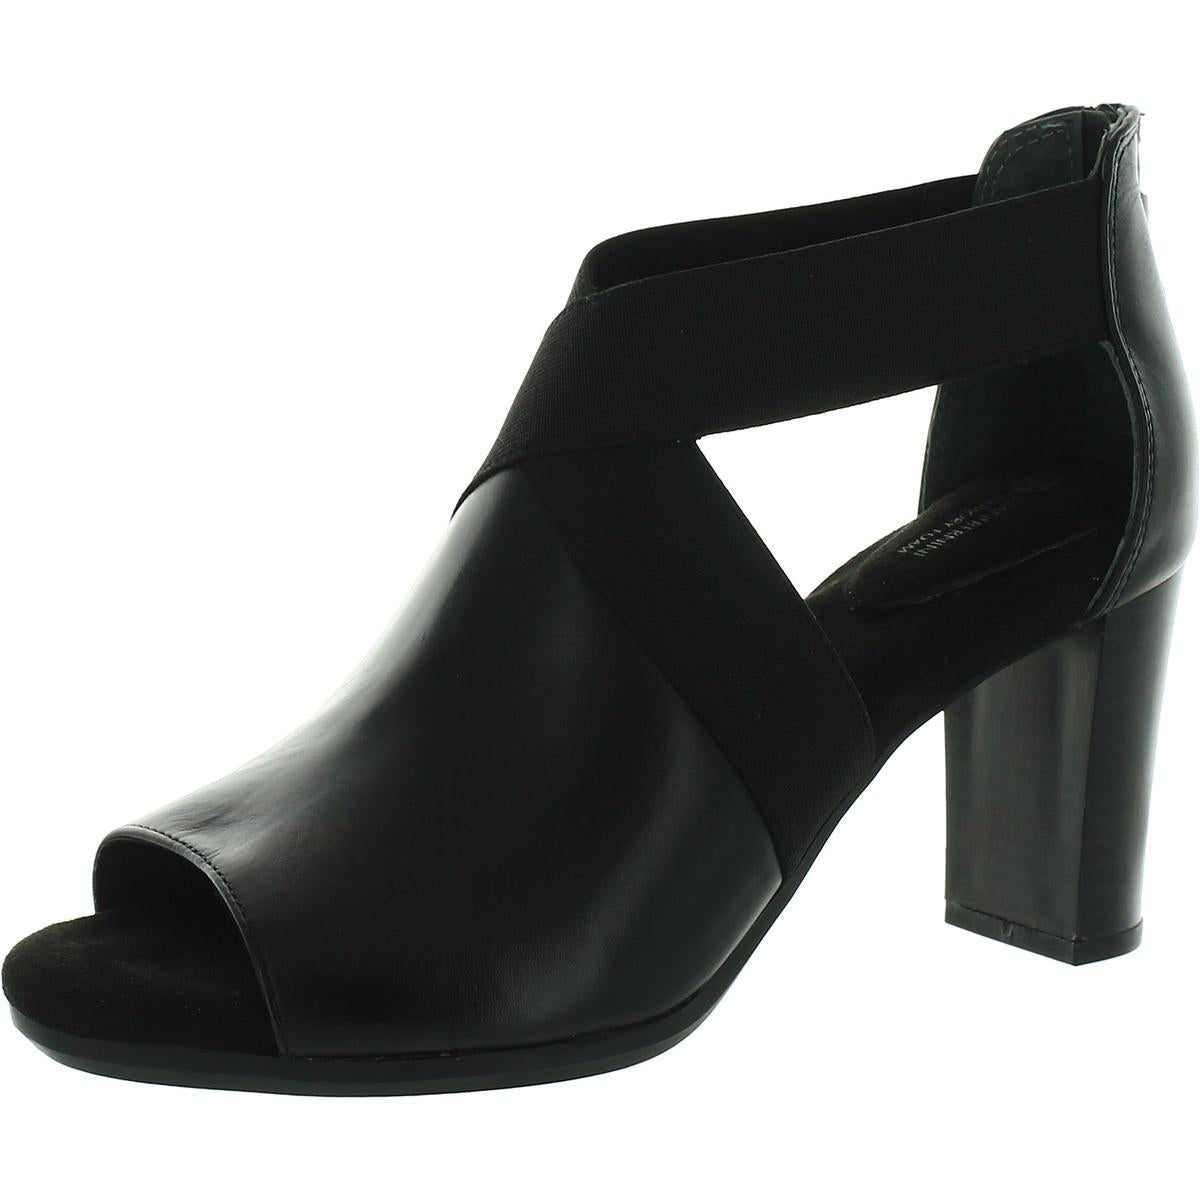 Shoes Heels Stiletto By Giani Bernini Size: 7.5